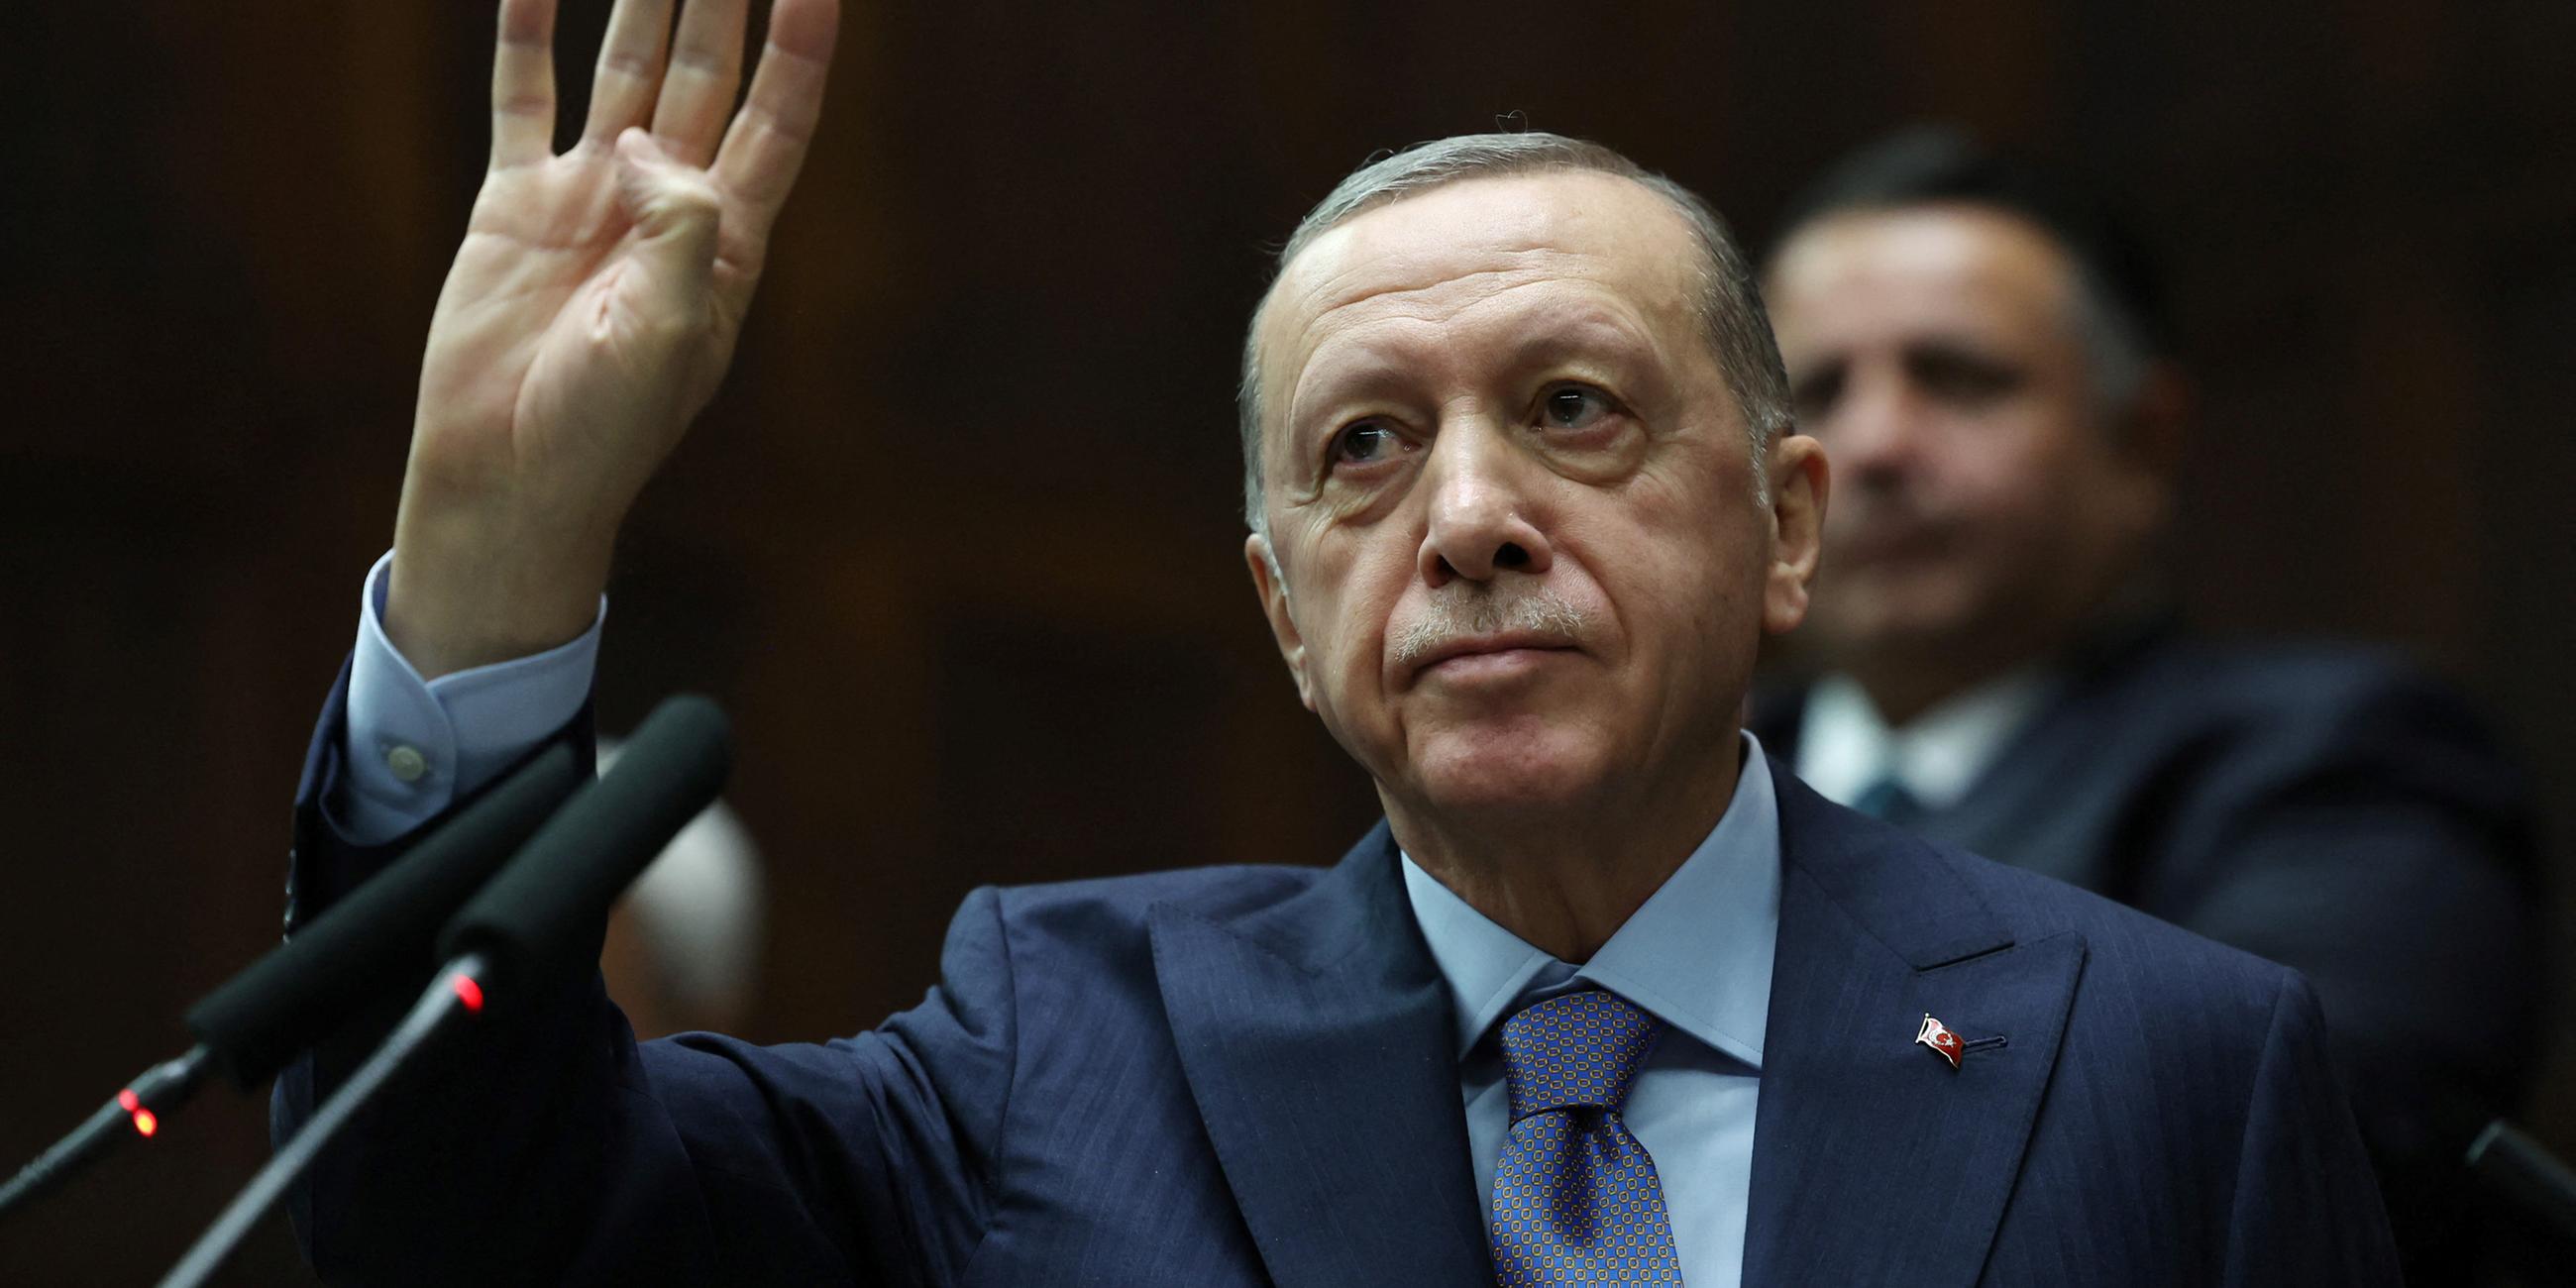 Turkey's President Tayyip Erdogan greets members of parliament in Ankara